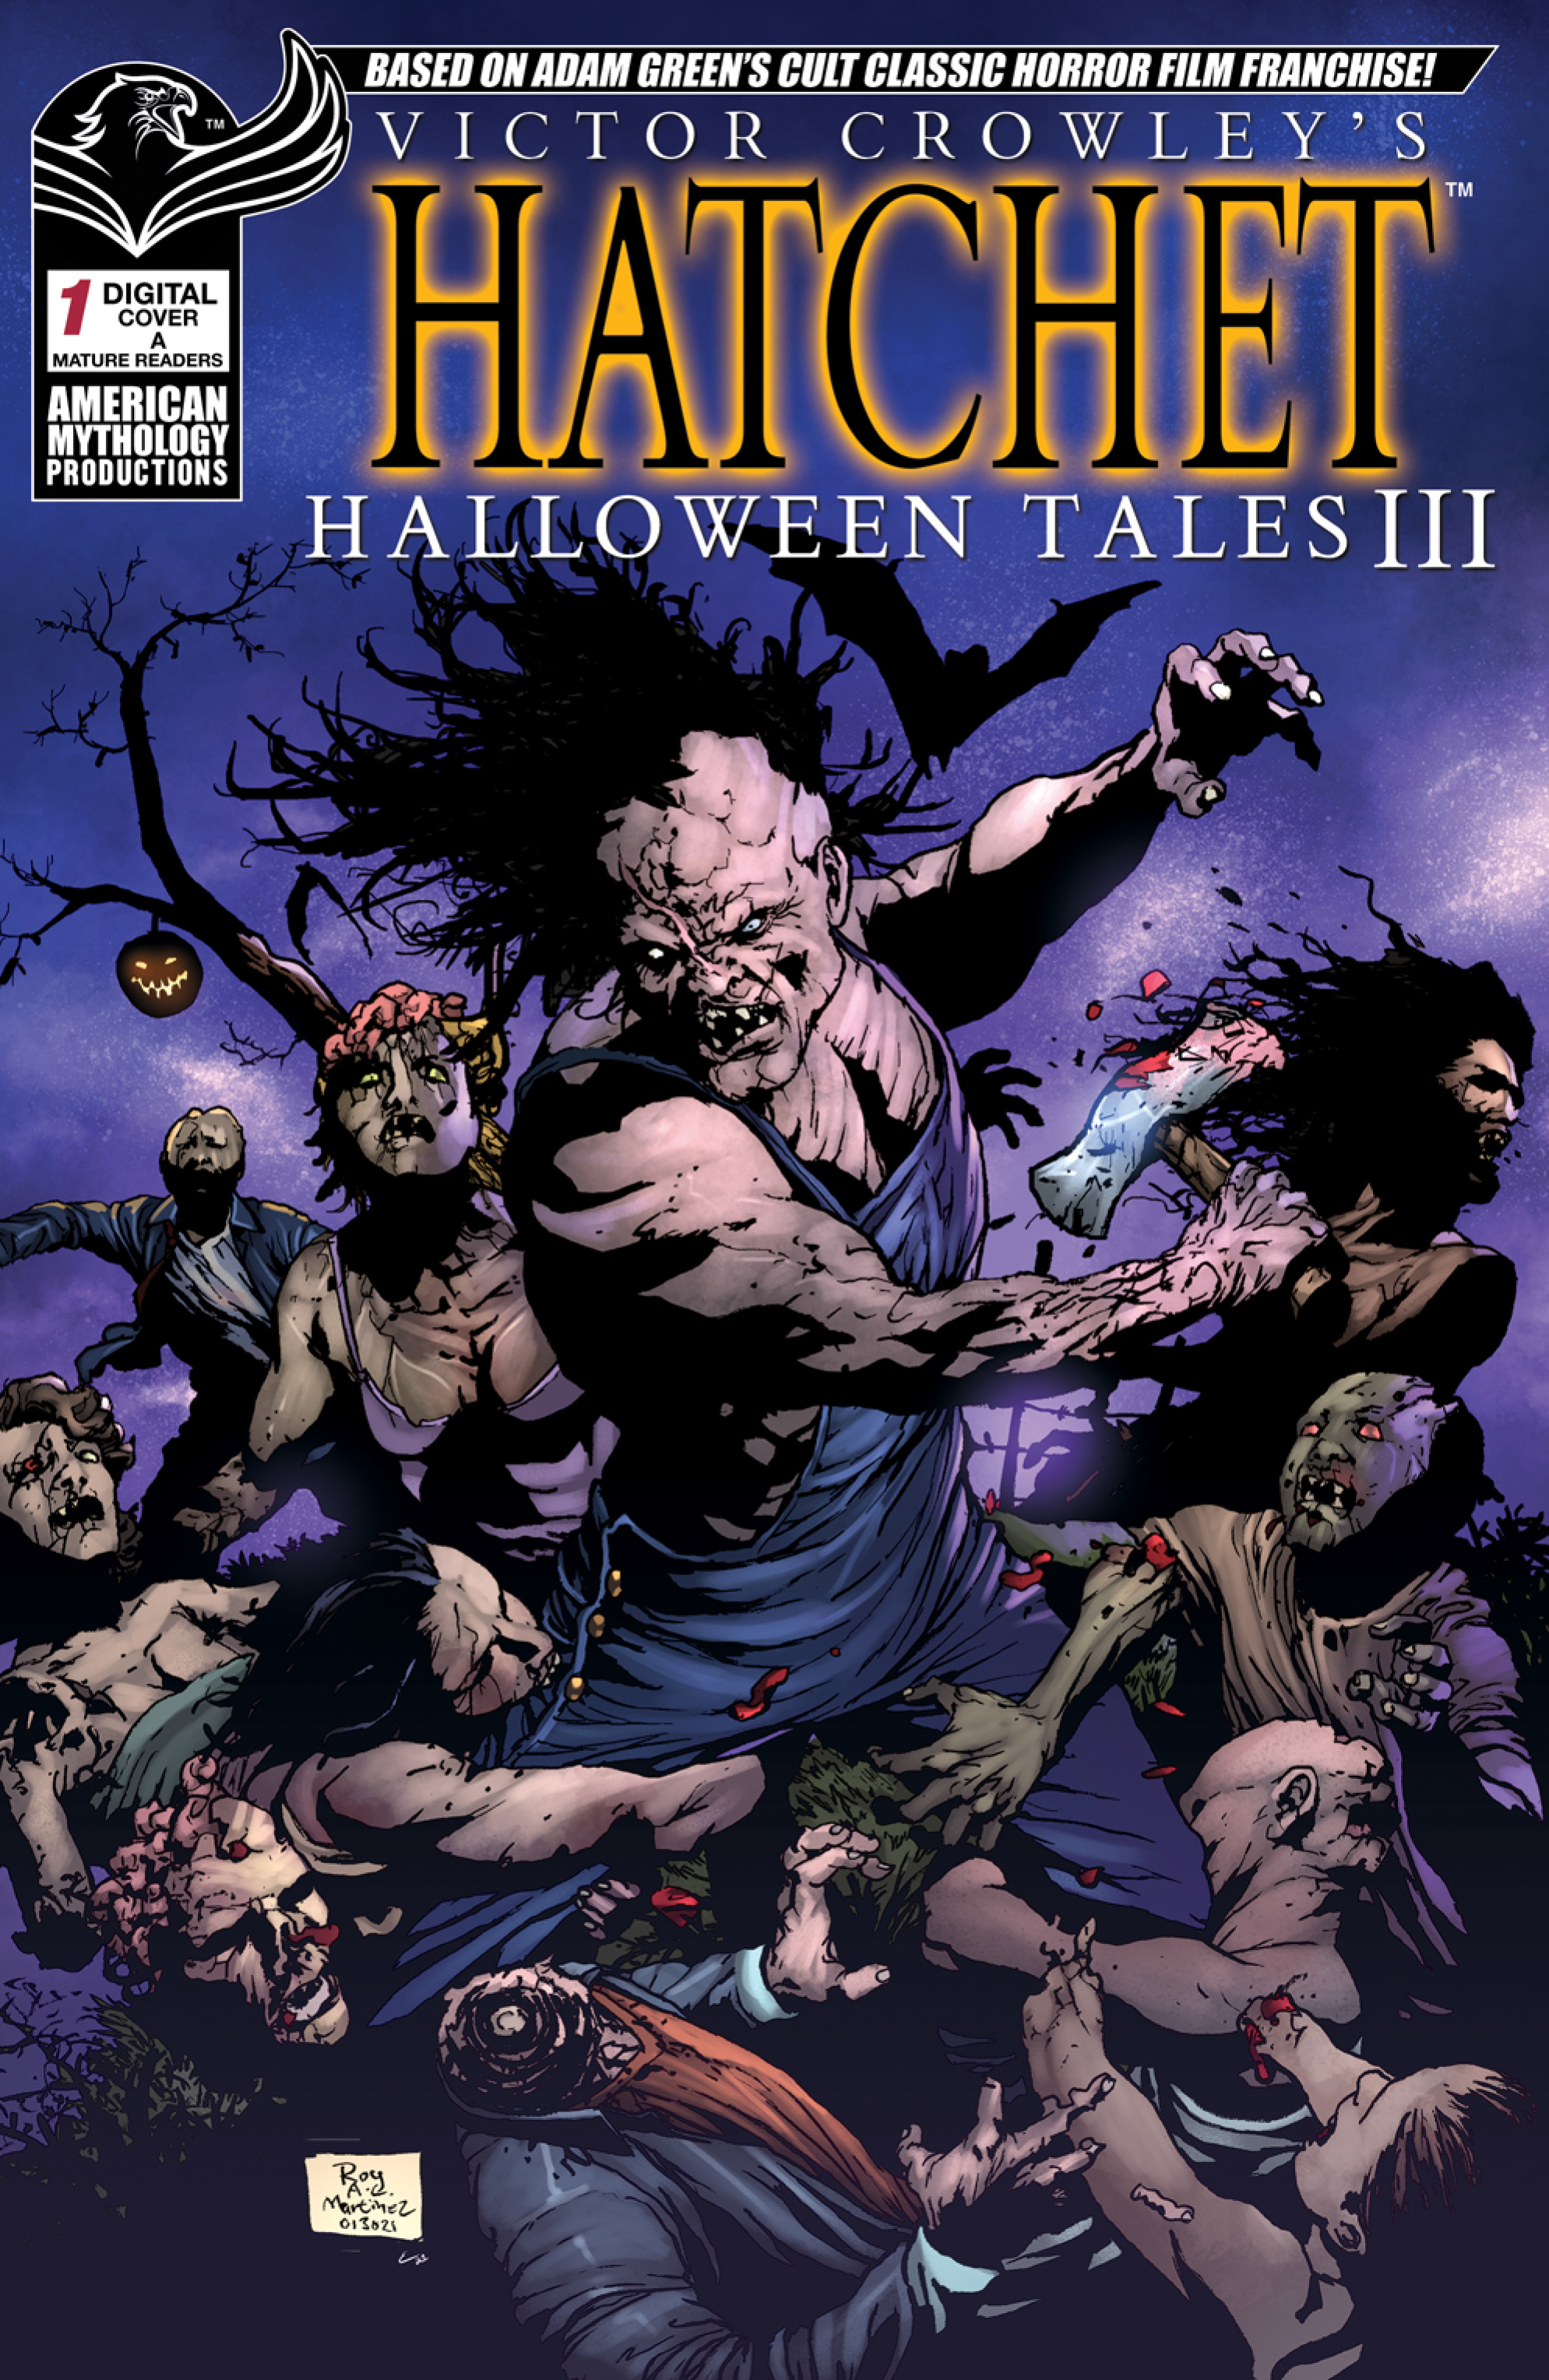 Victor Crowley's Hatchet: Halloween Tales III (2021-): Chapter 1 - Page 1